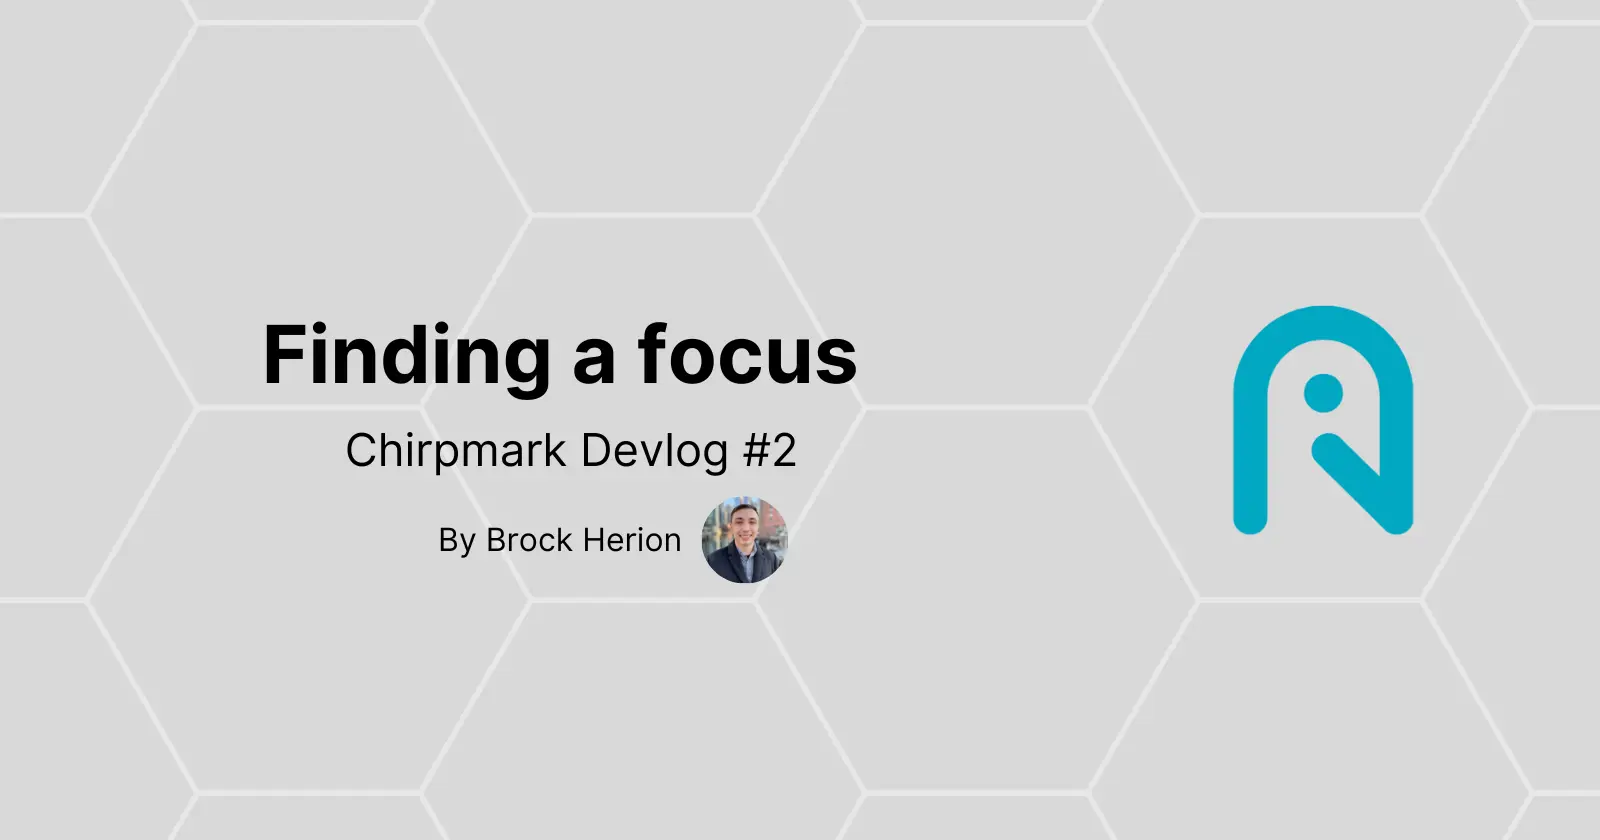 Finding a focus - Chirpmark Devlog #2